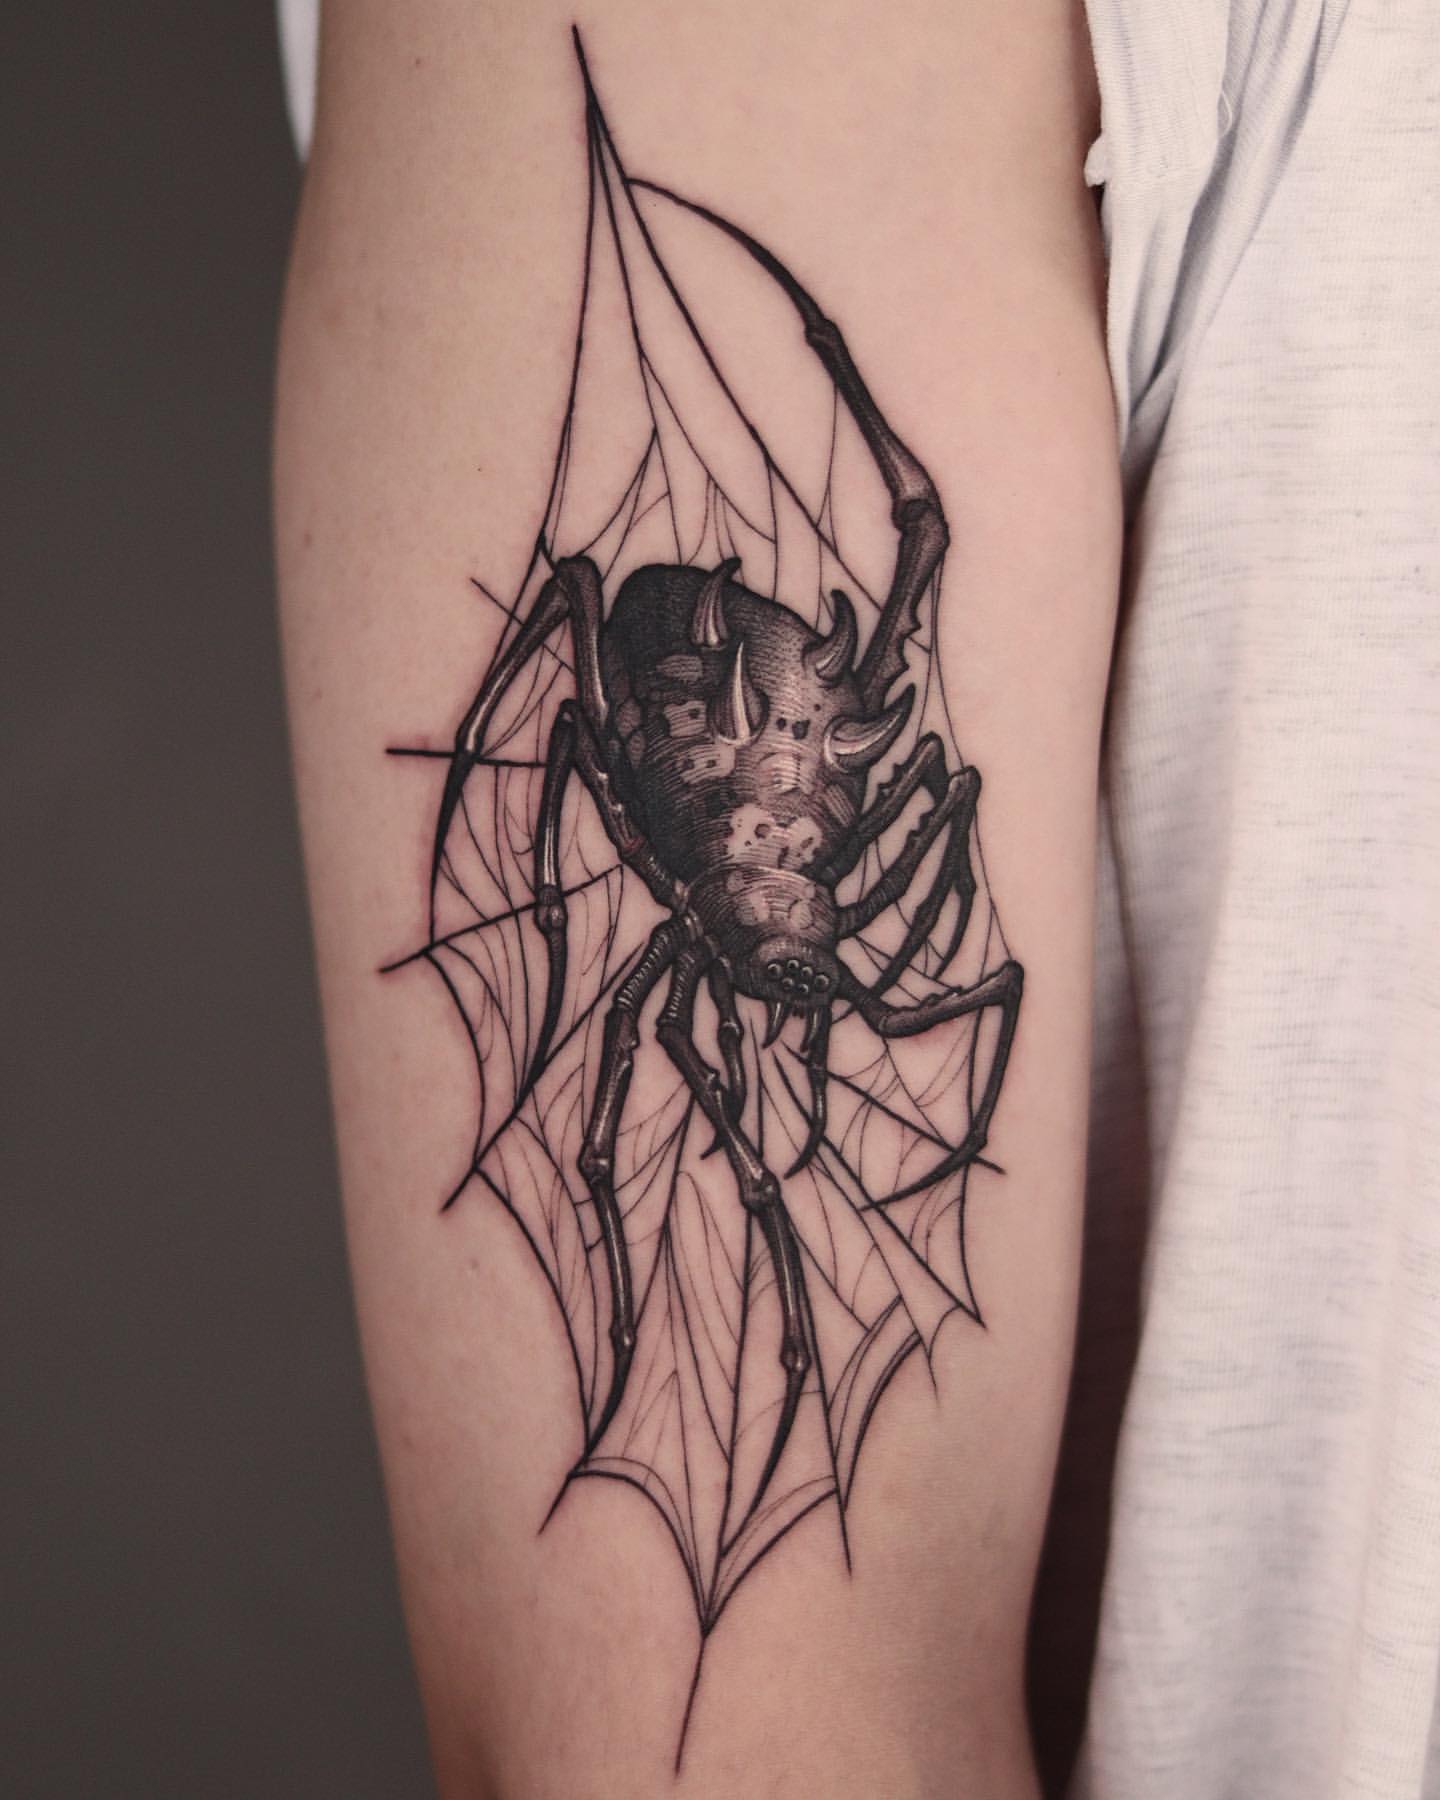 Spider Tattoo Ideas 2